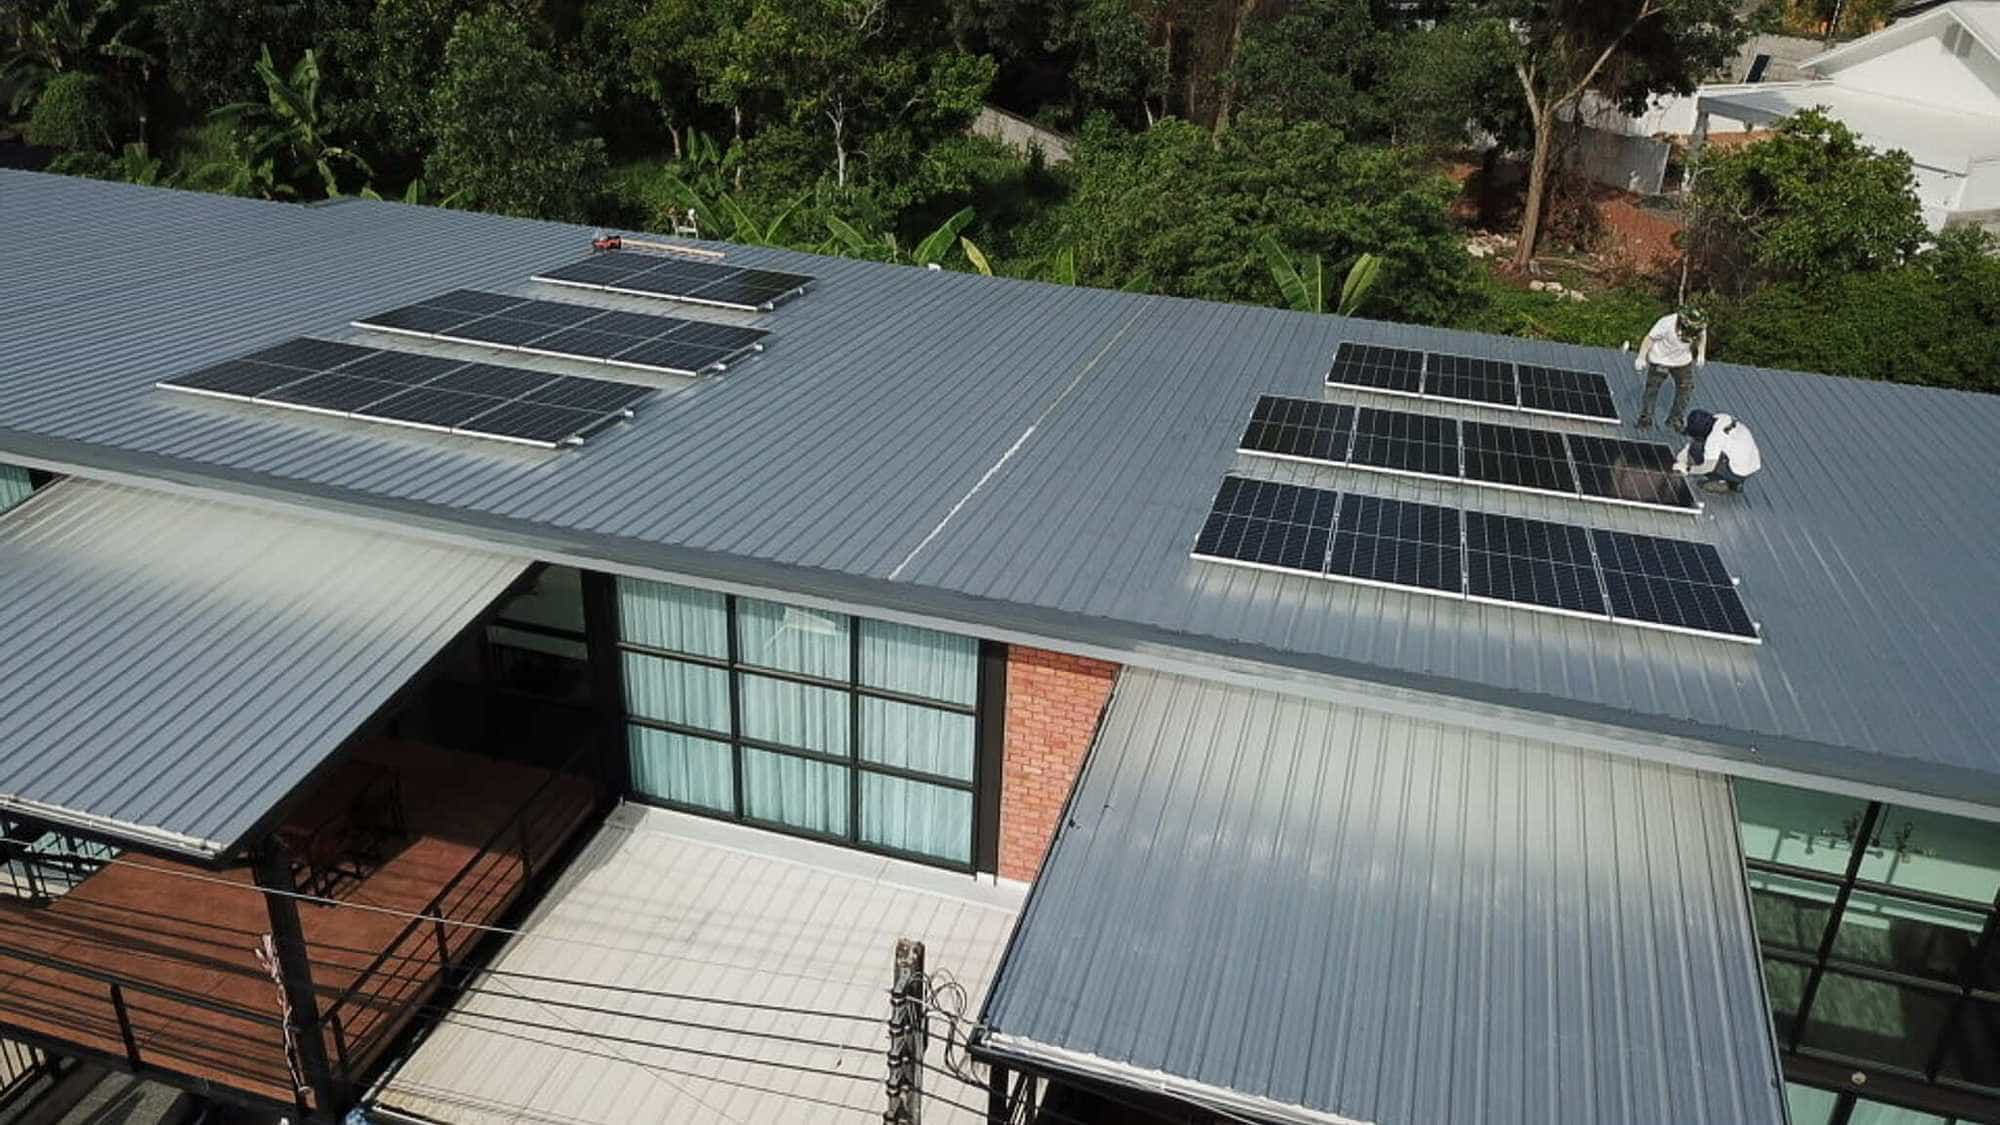 Solar power panels on a shop house roof, Phuket